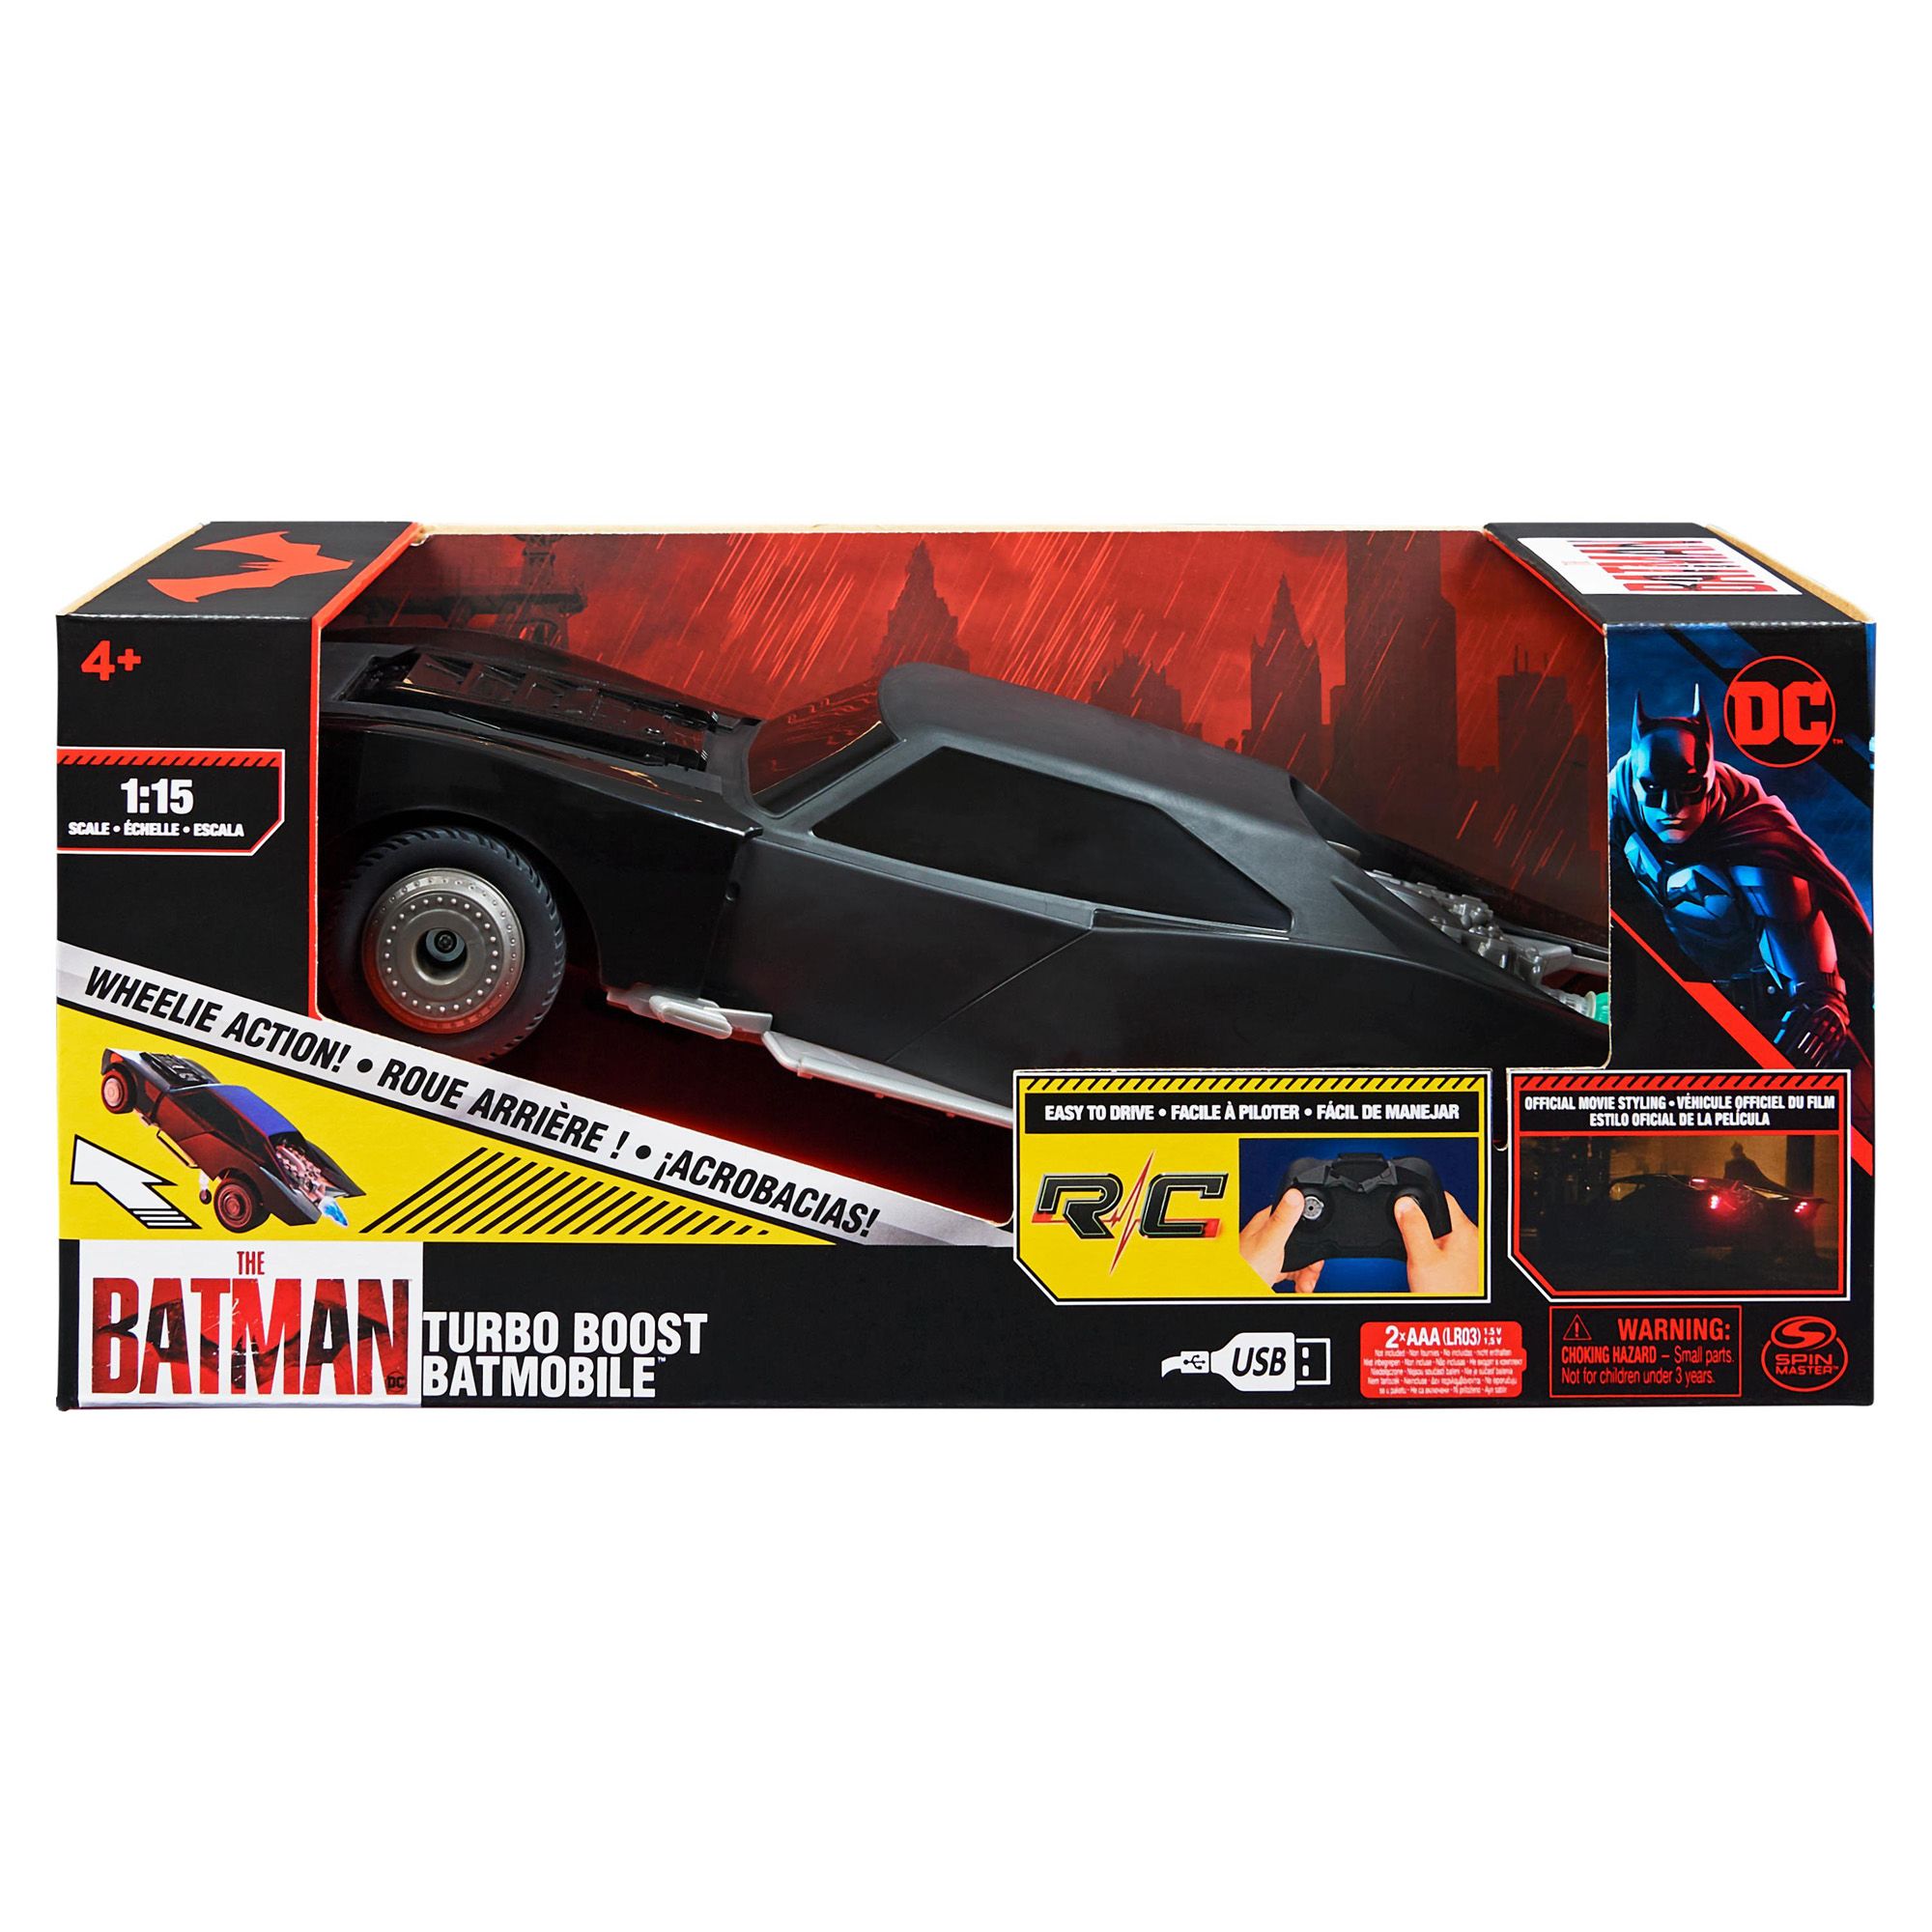 Turbo Boost Batmobile Packaged